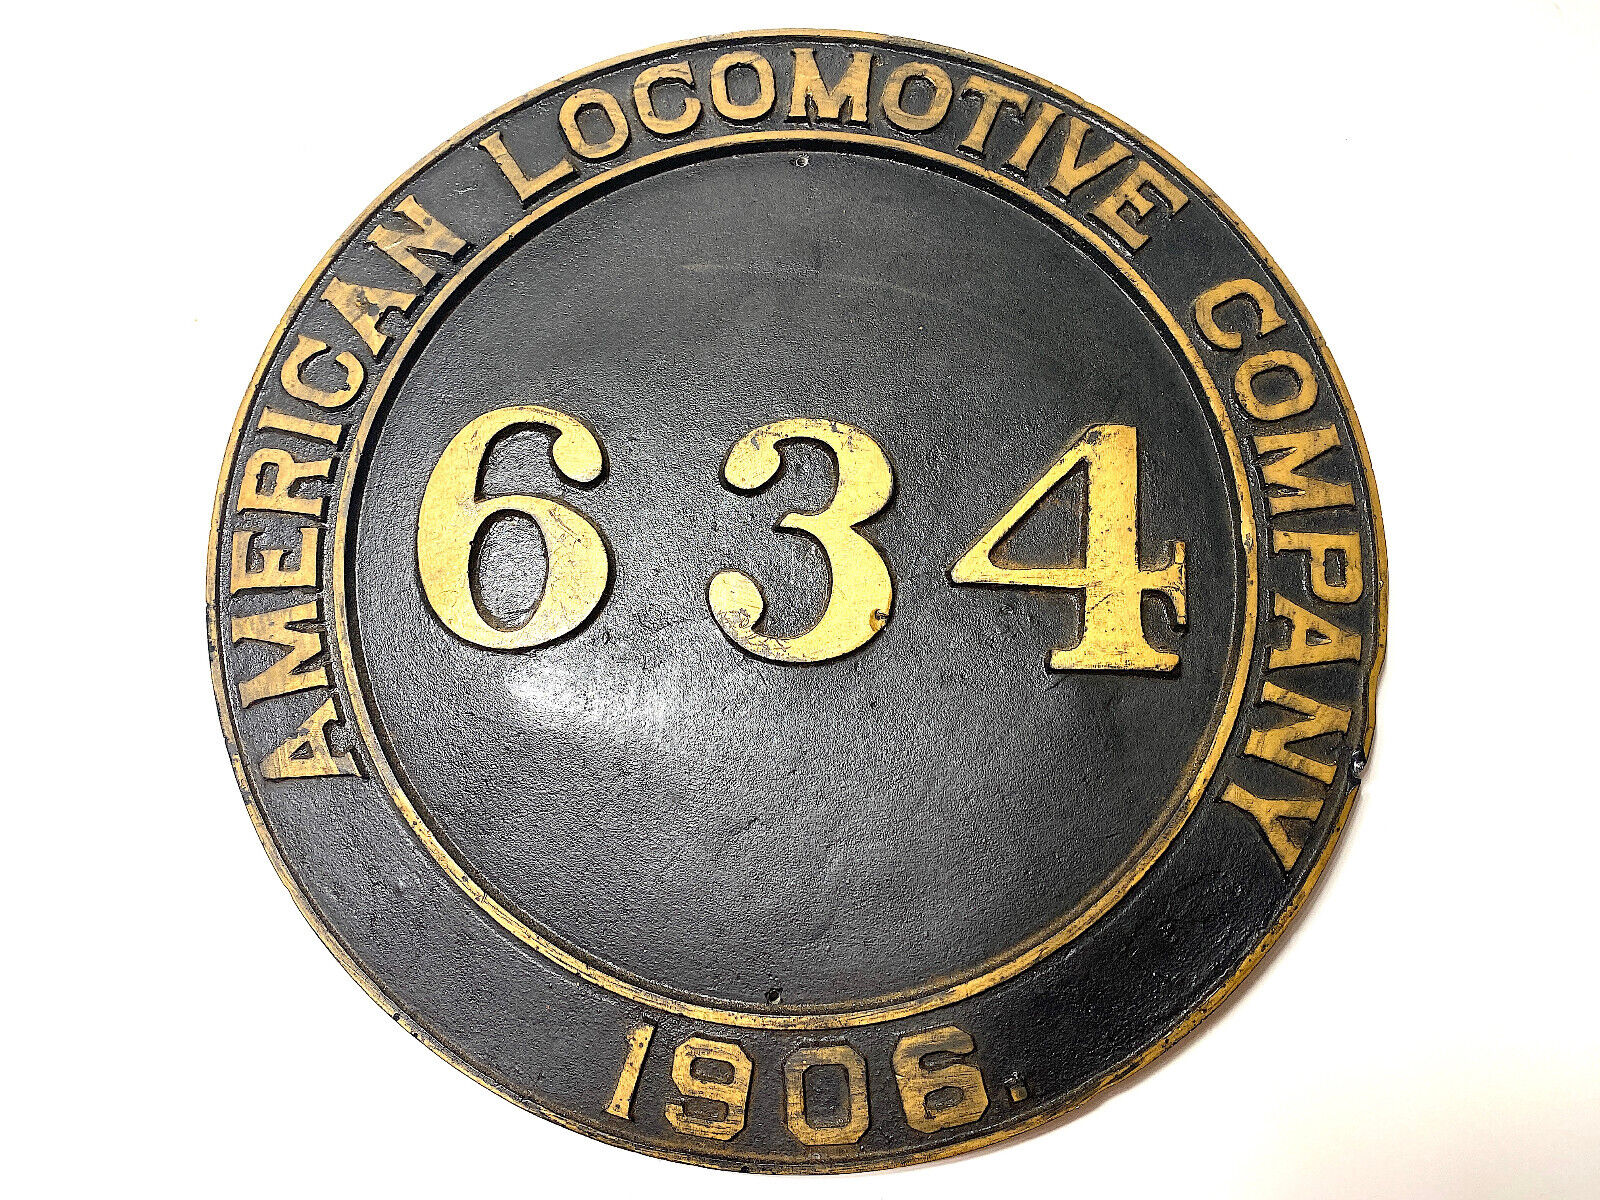 VINTAGE AMERICAN LOCOMOTIVE 634 TRAIN BUILDERS PLATE  1906 & PROVENANCE